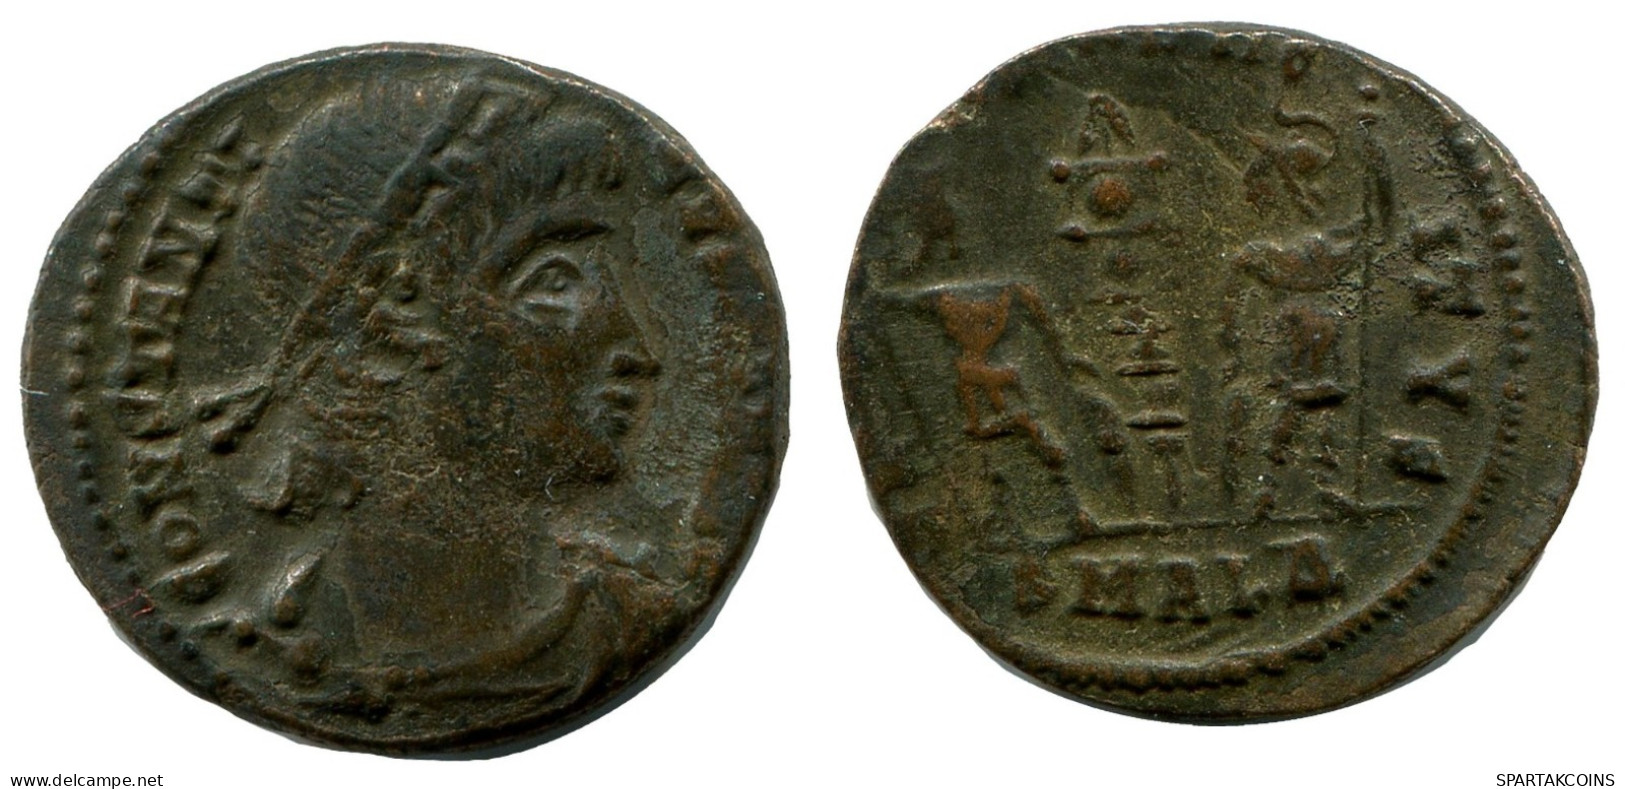 CONSTANTIUS II ALEKSANDRIA FROM THE ROYAL ONTARIO MUSEUM #ANC10464.14.D.A - El Impero Christiano (307 / 363)